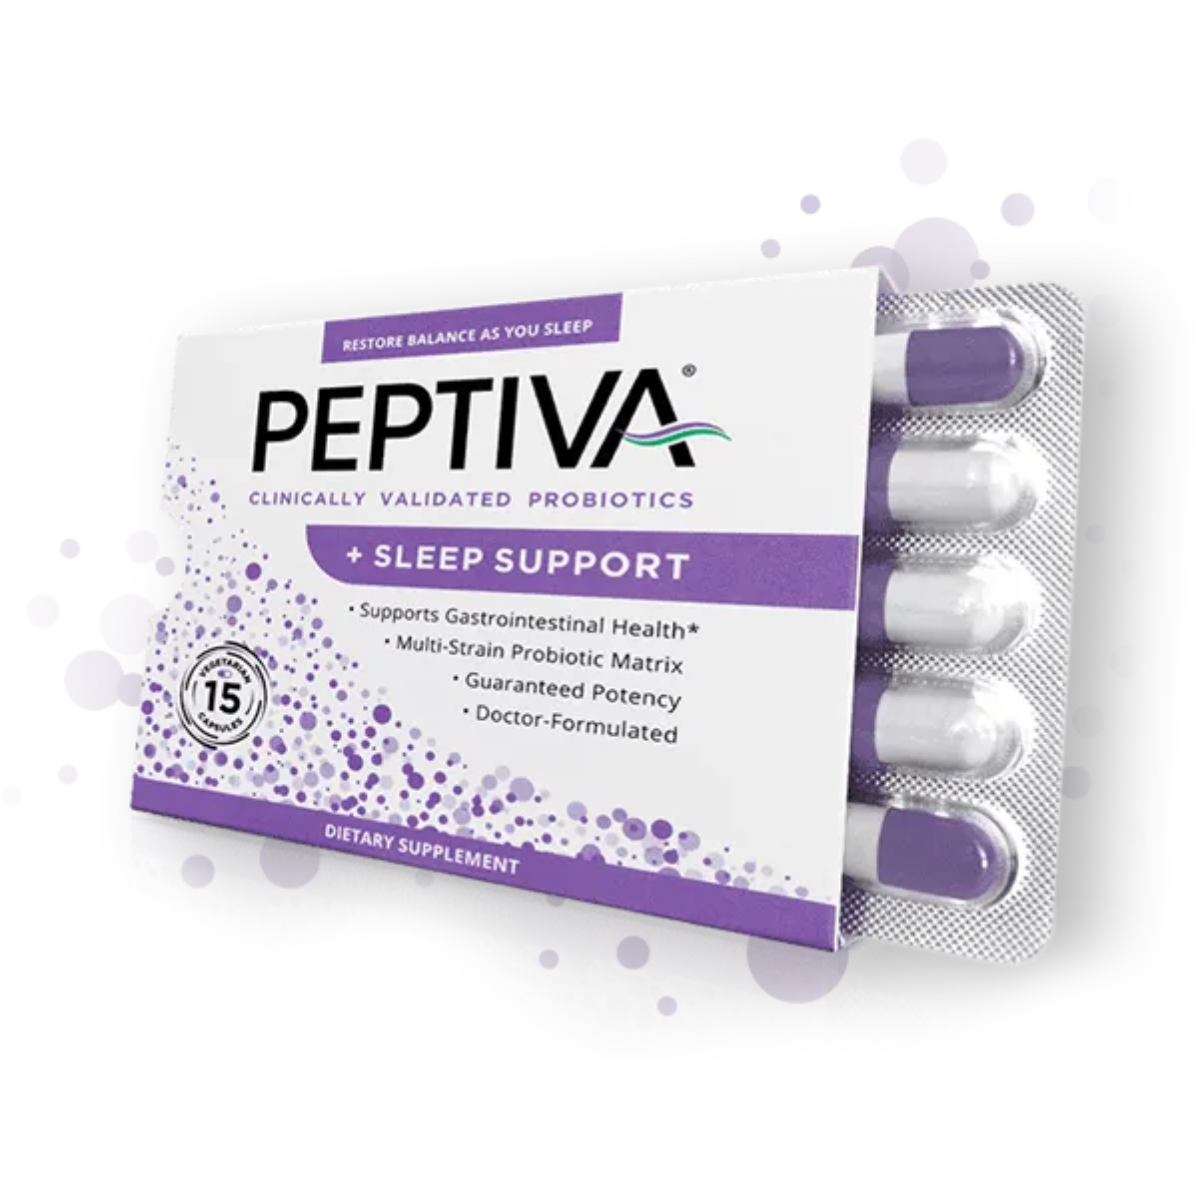 Peptiva probiotics - Sleep Support